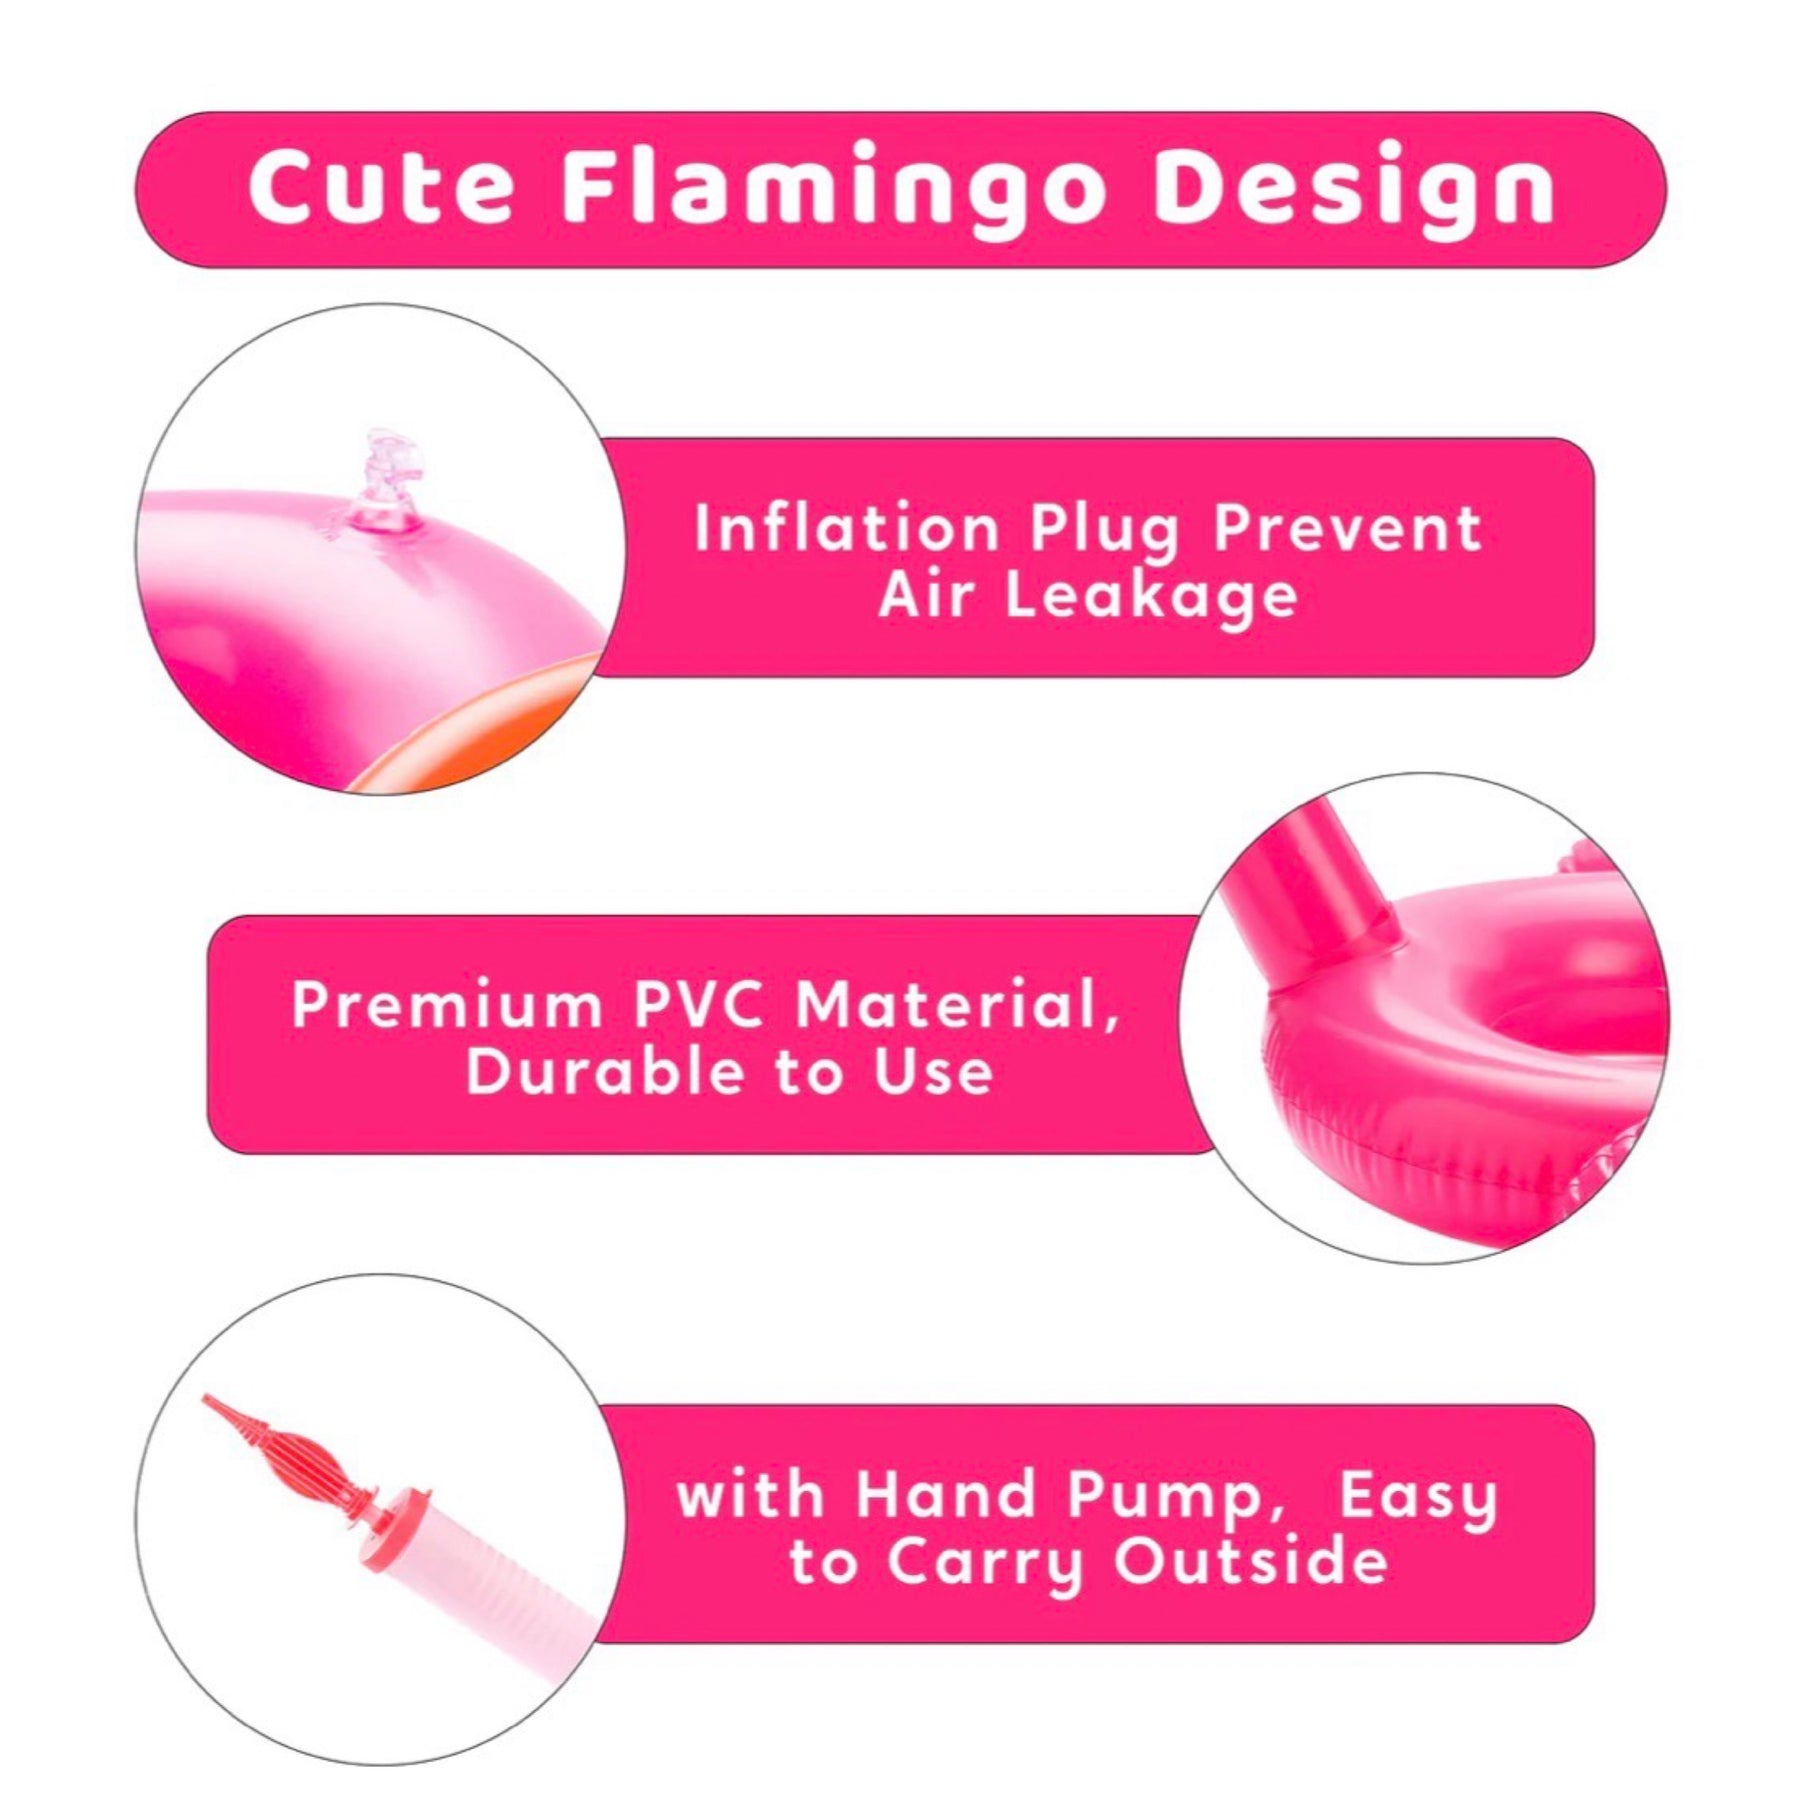 12pc Joyin Inflatable Flamingo Ring Toss Games With Hand Pump - Pool Time Fun